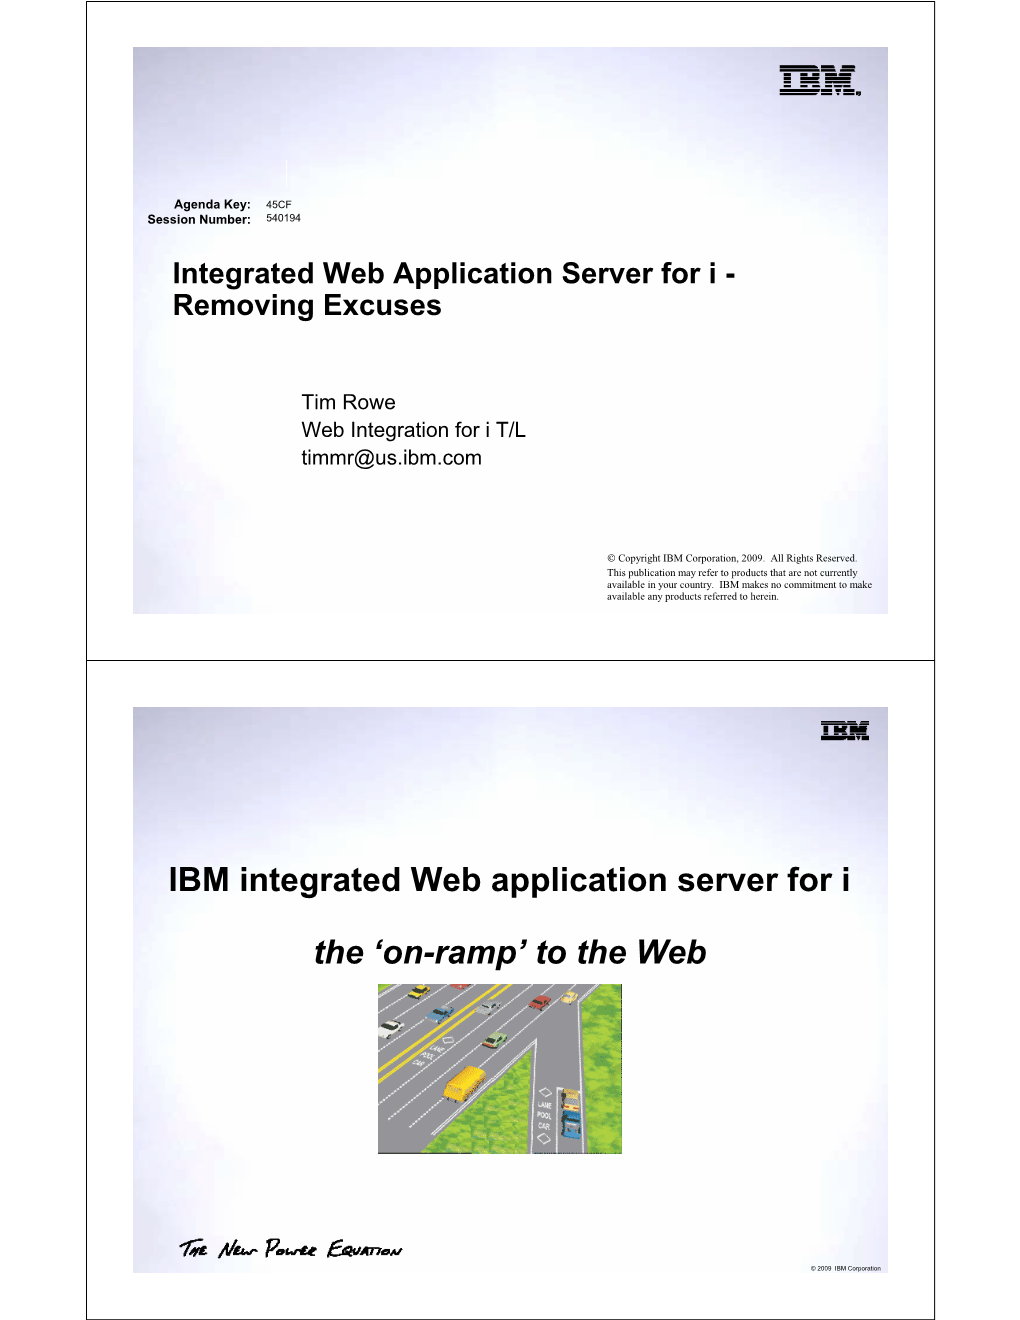 IBM Integrated Web Application Server for I